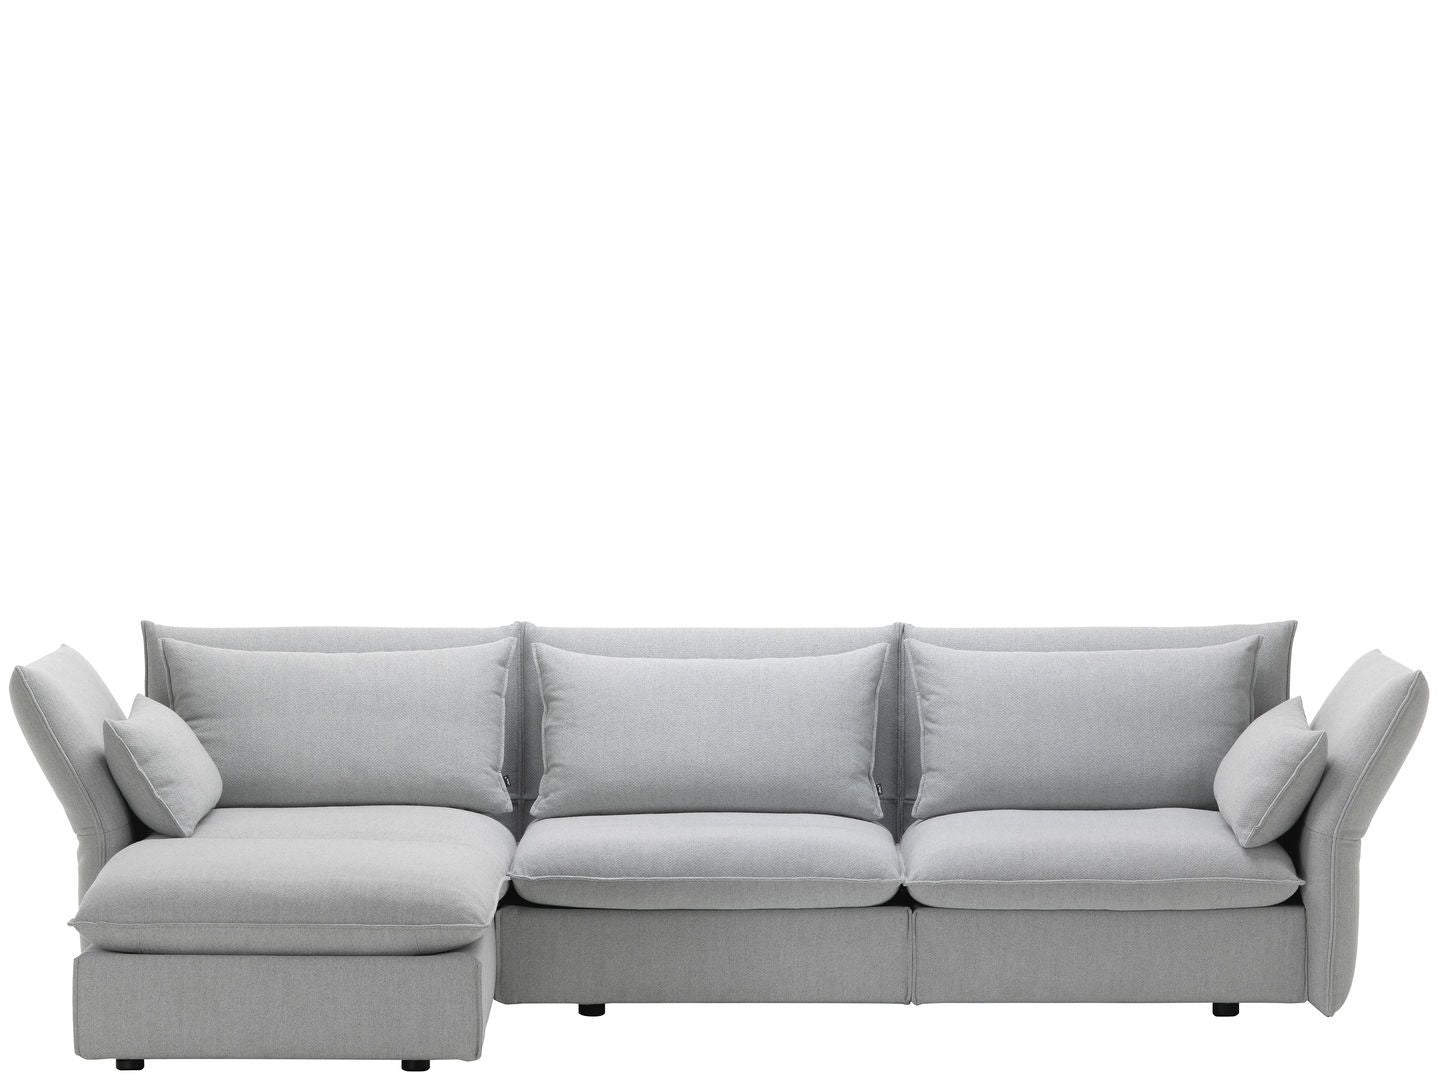 Vitra Mariposa Corner Sofa from One52 Furniture